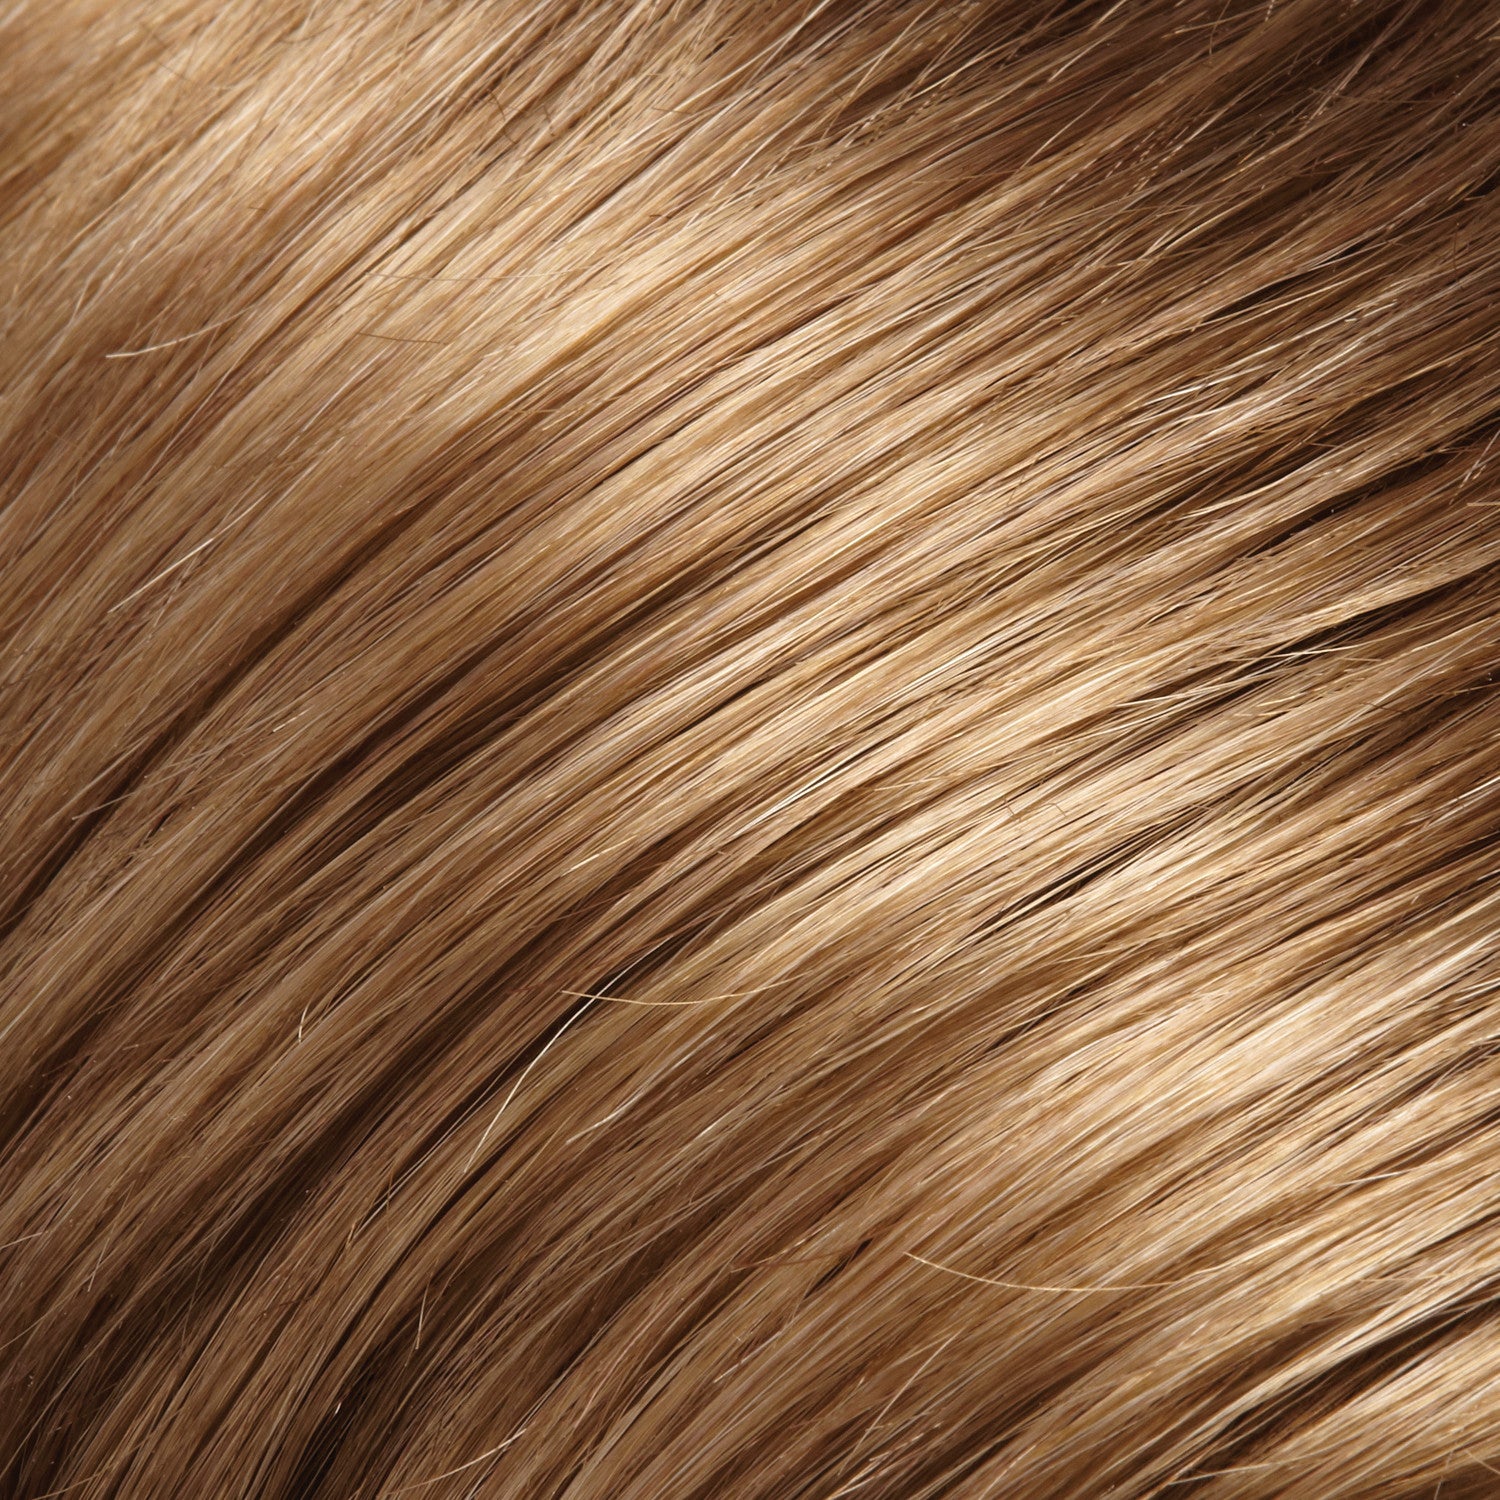 Лайт браун. Голд Браун цвет волос. Golden Brown цвет волос. Light Golden Brown цвет волос. Волосы теплого оттенка пралине.